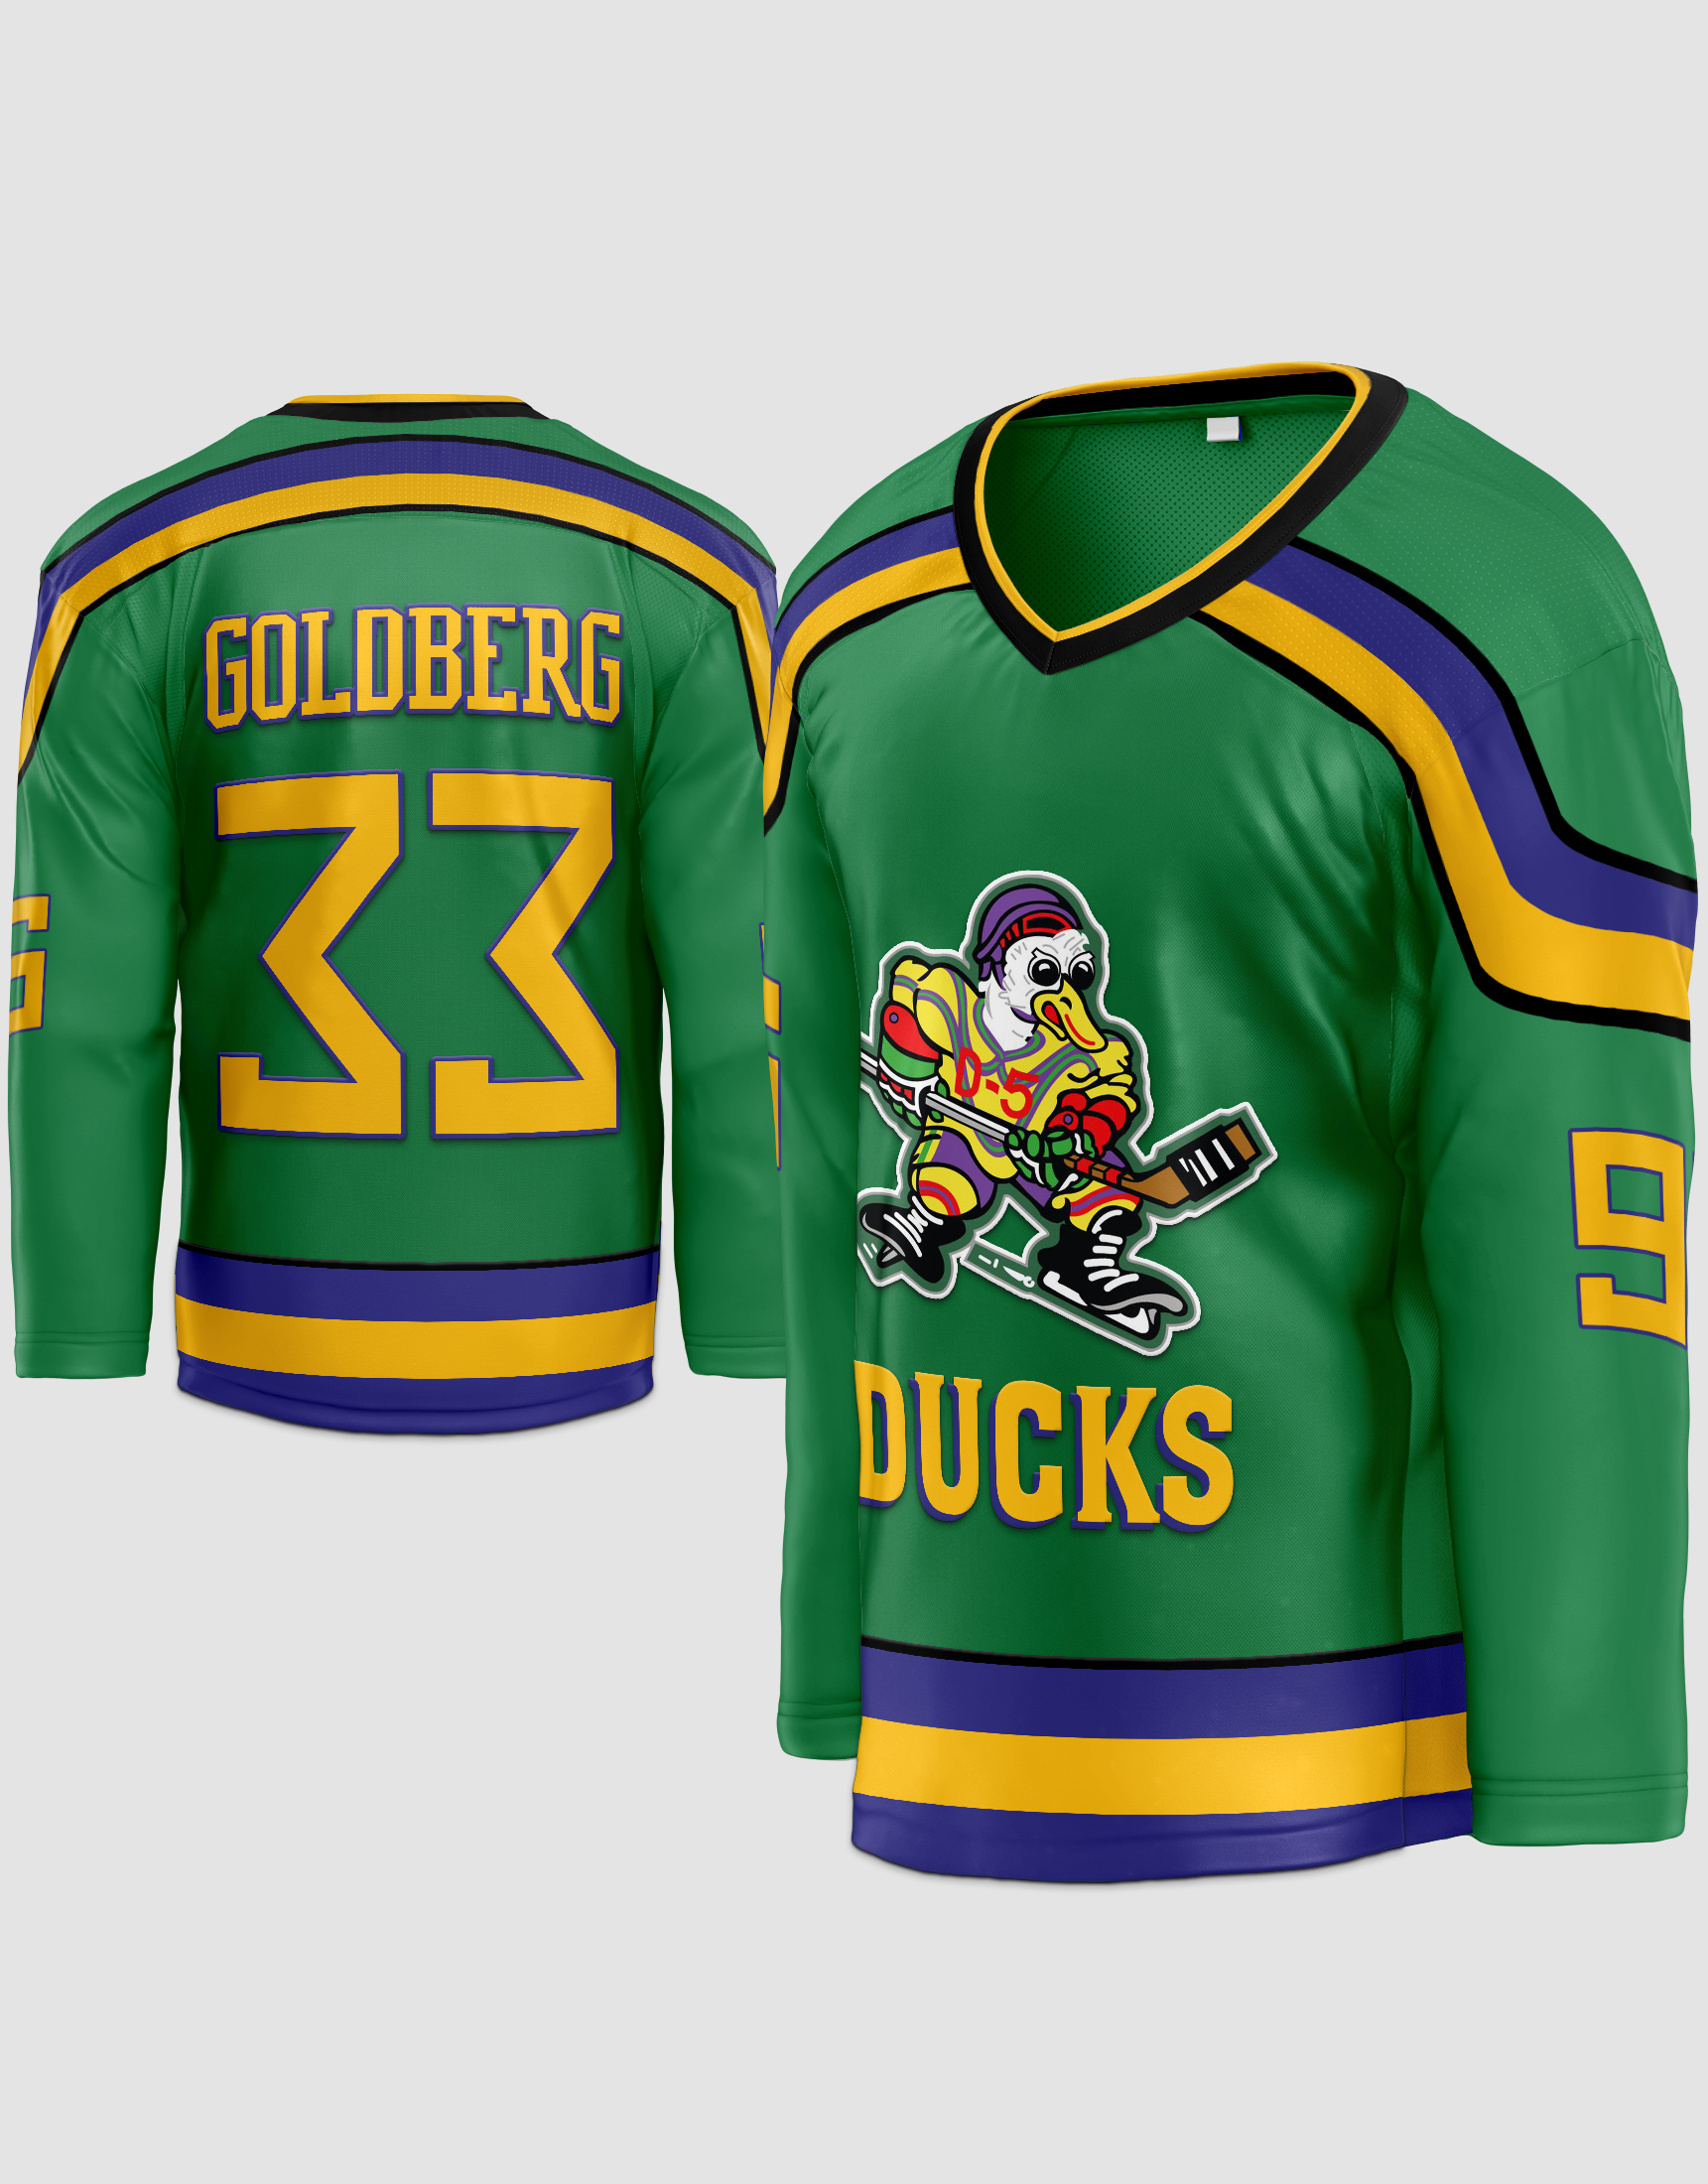 Greg Goldberg #33 Mighty Ducks Hockey Jersey Green - Top Smart Design